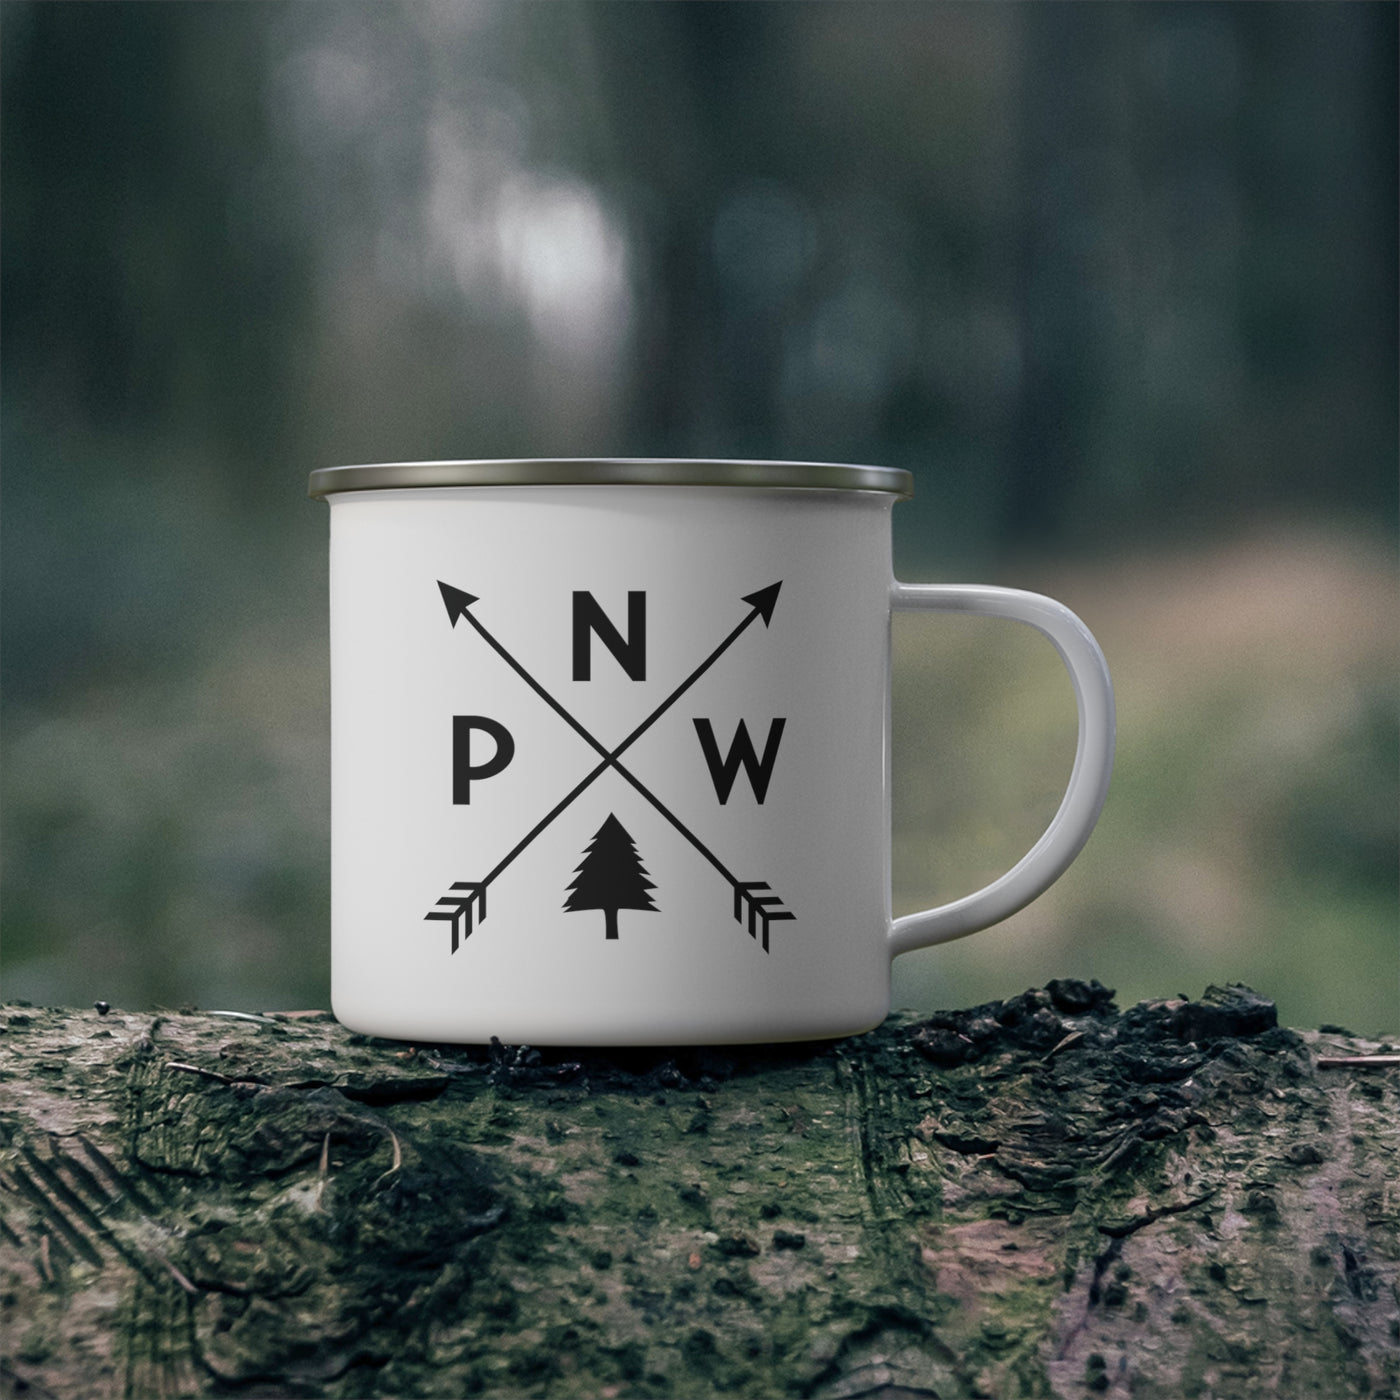 PNW Arrows Enamel Camping Mug